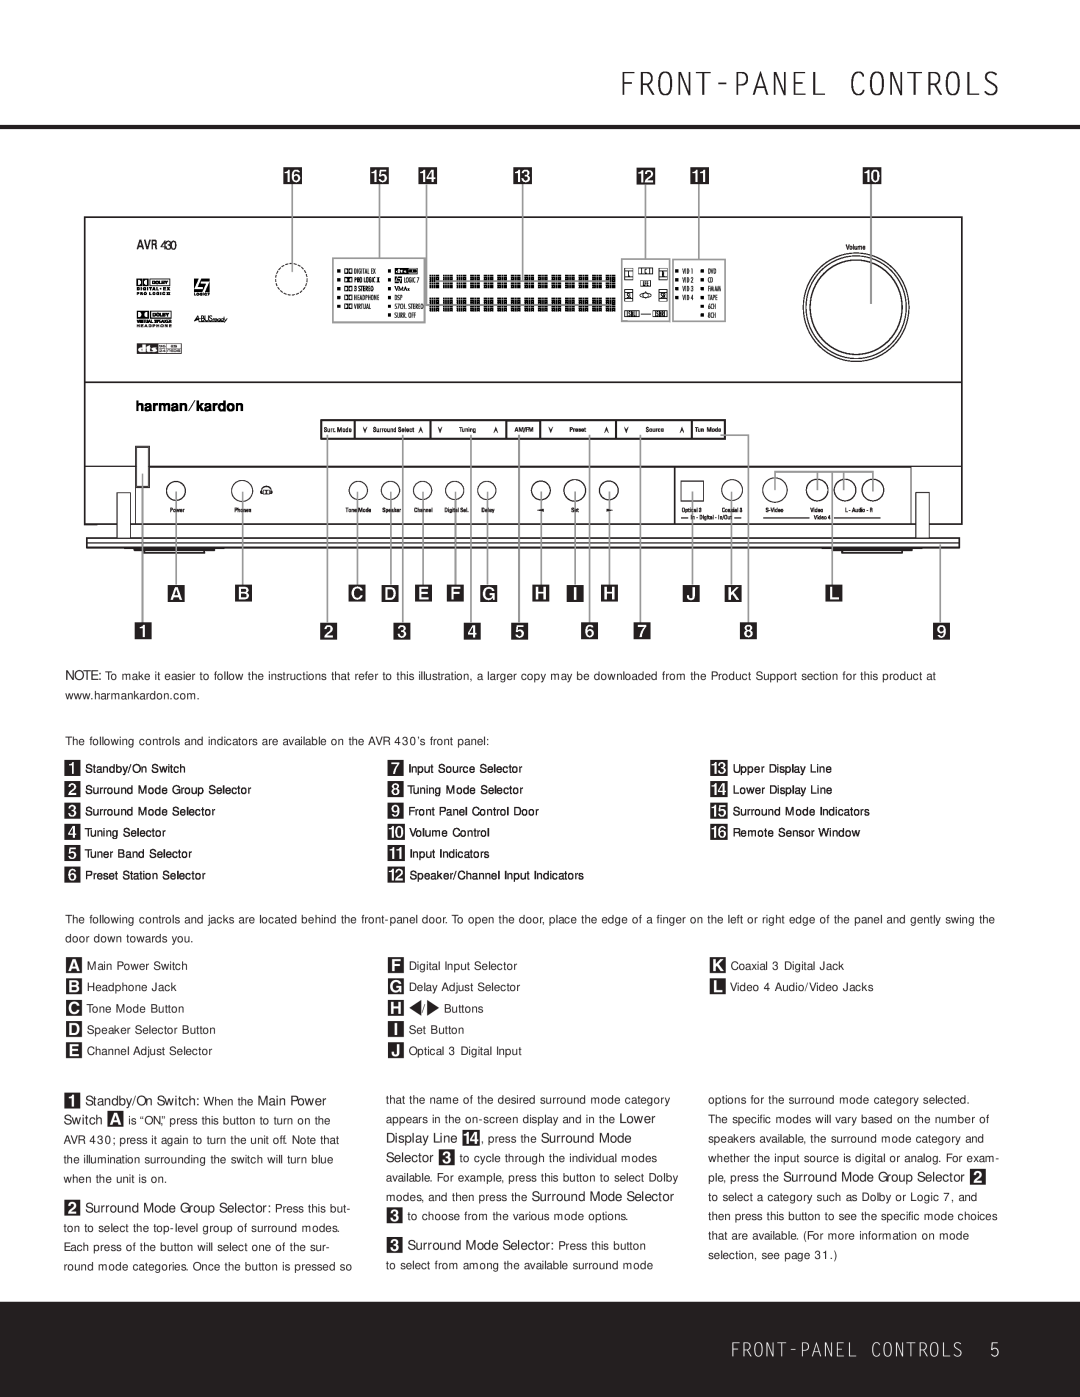 Harman-Kardon AVR 430 owner manual Front-Panelcontrols, C D E F G H I H 